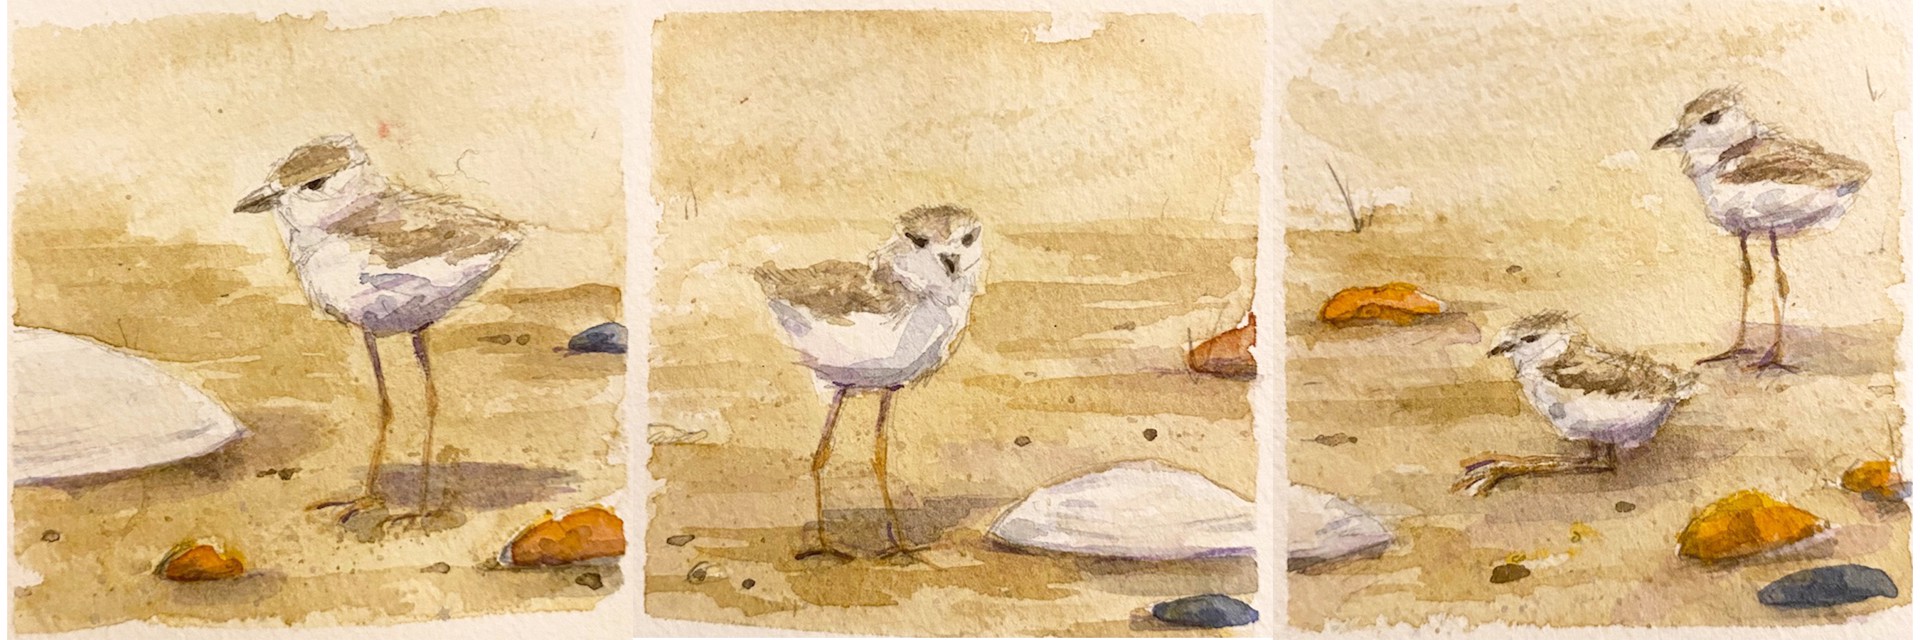 Shorebirds by Allison Charles